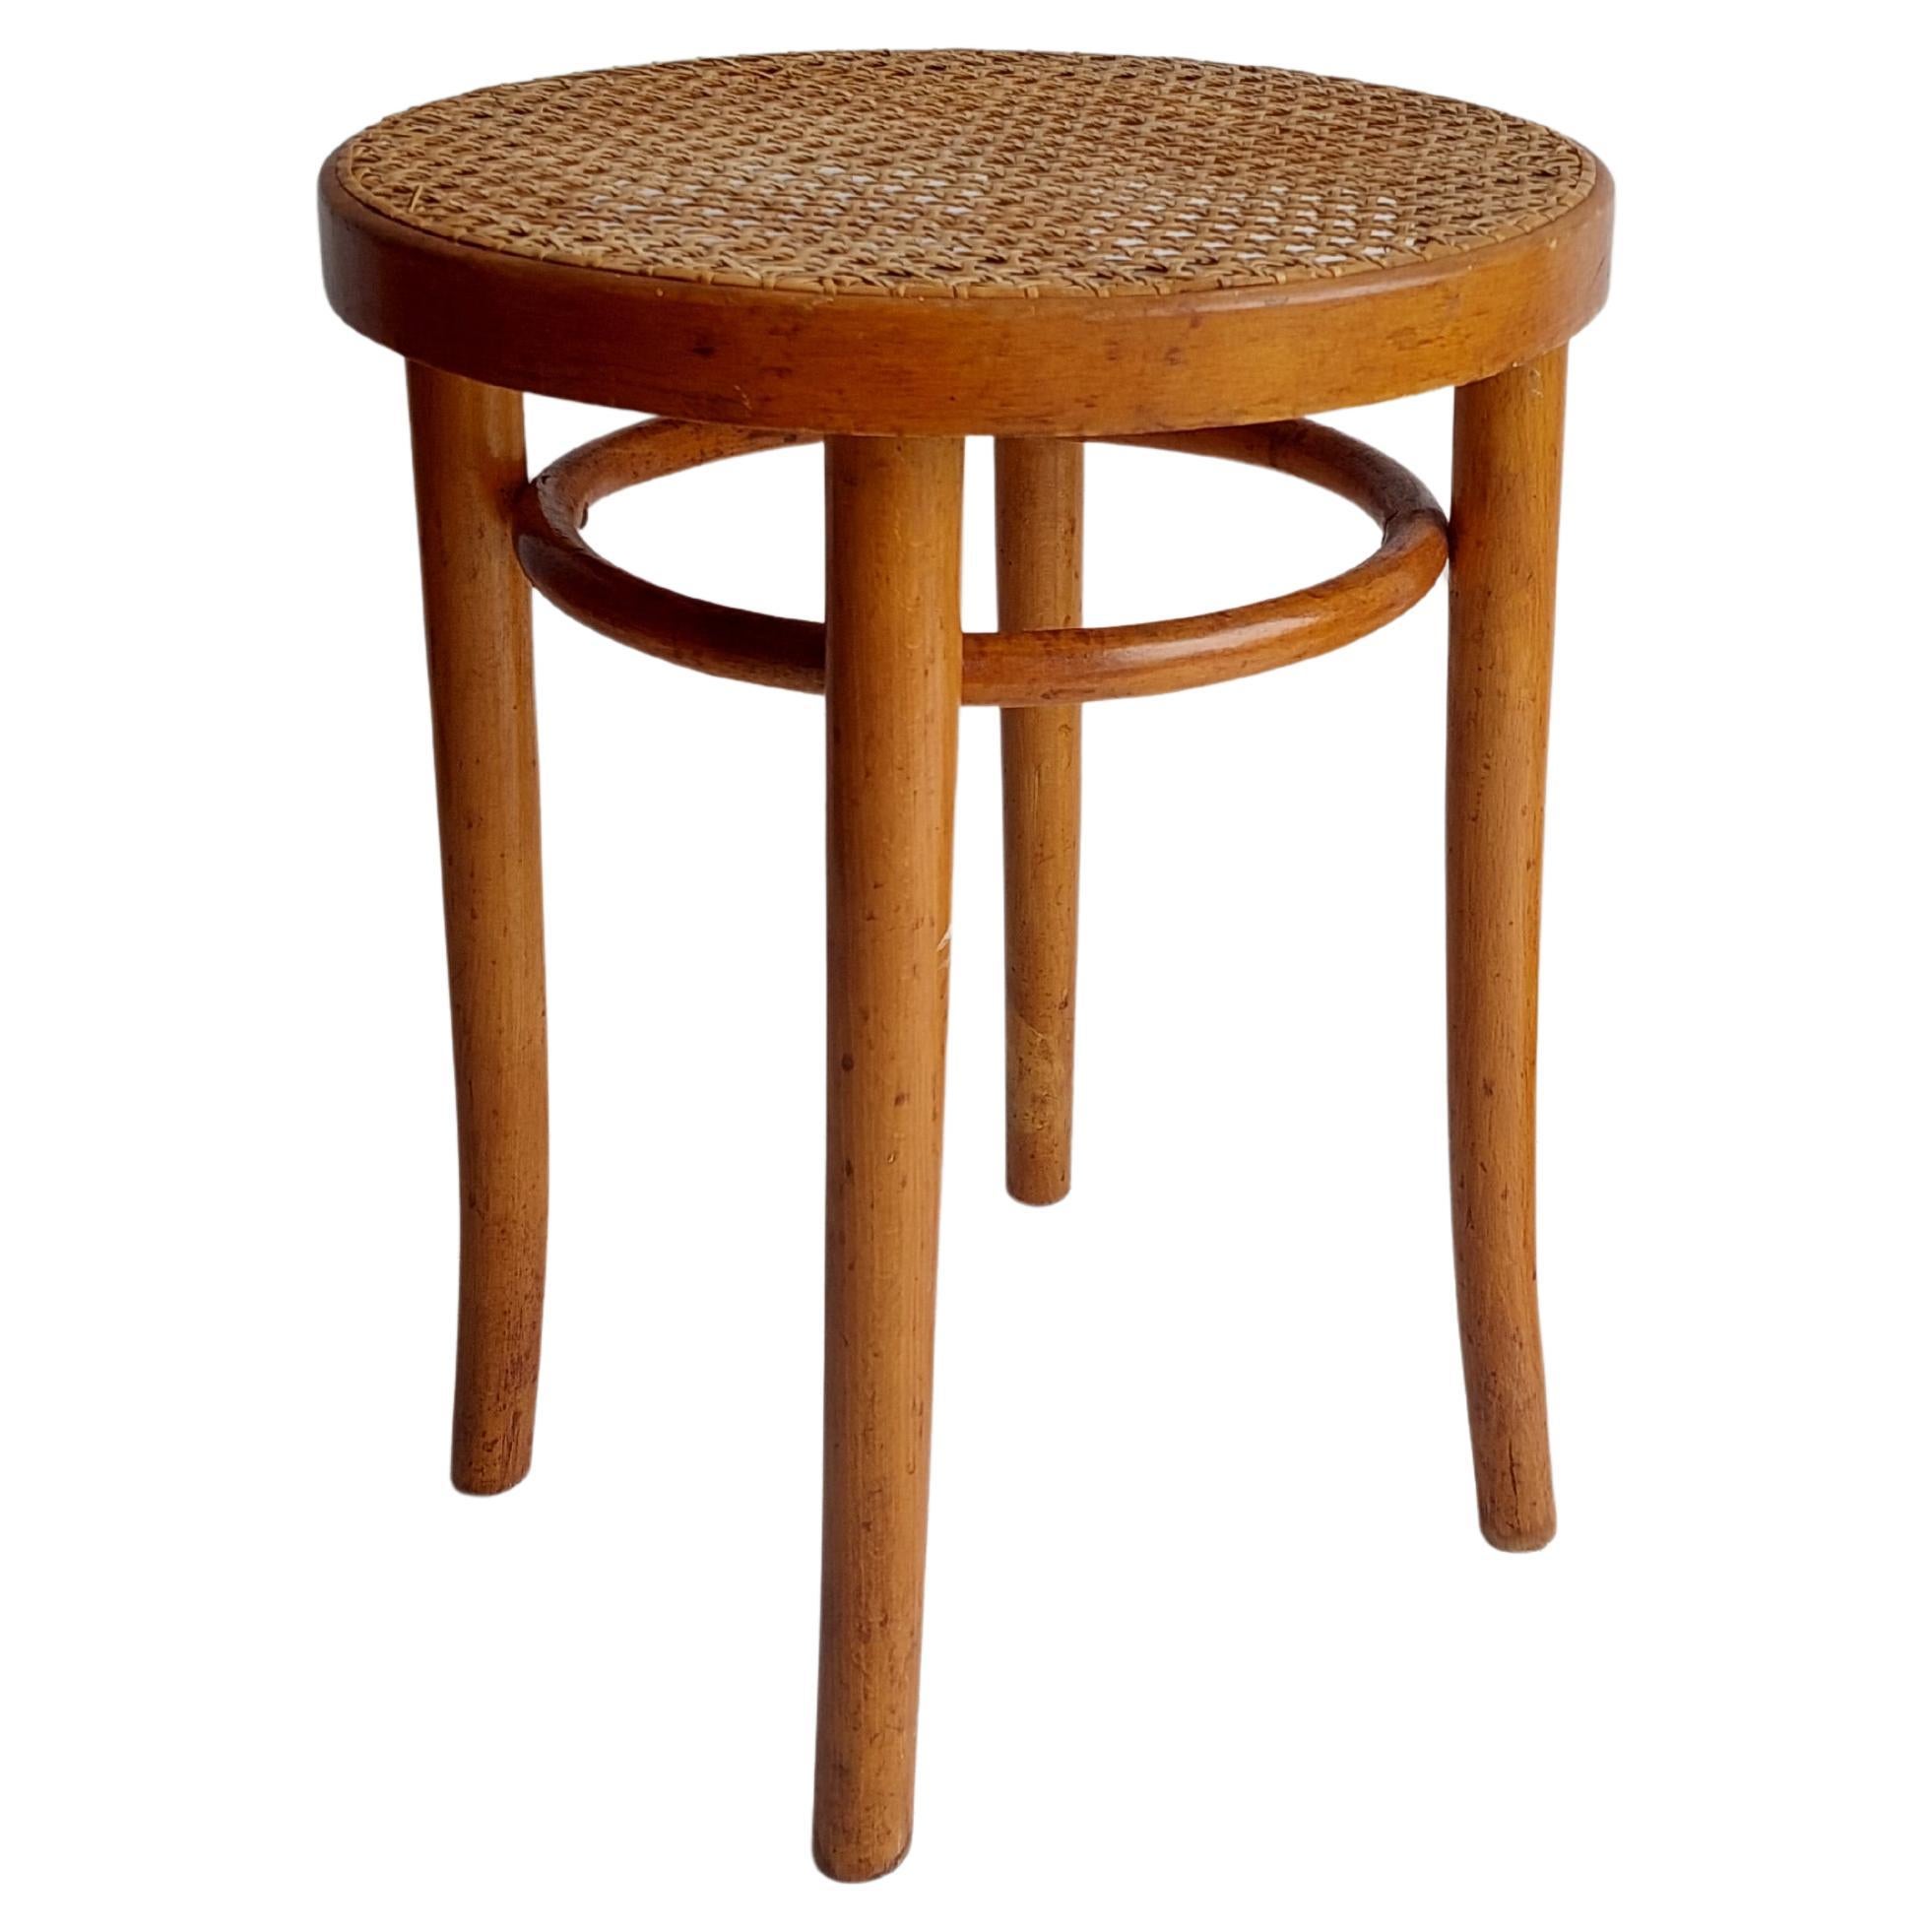 Early Mid Century Thonet style stool model 4601, 1930s 40s